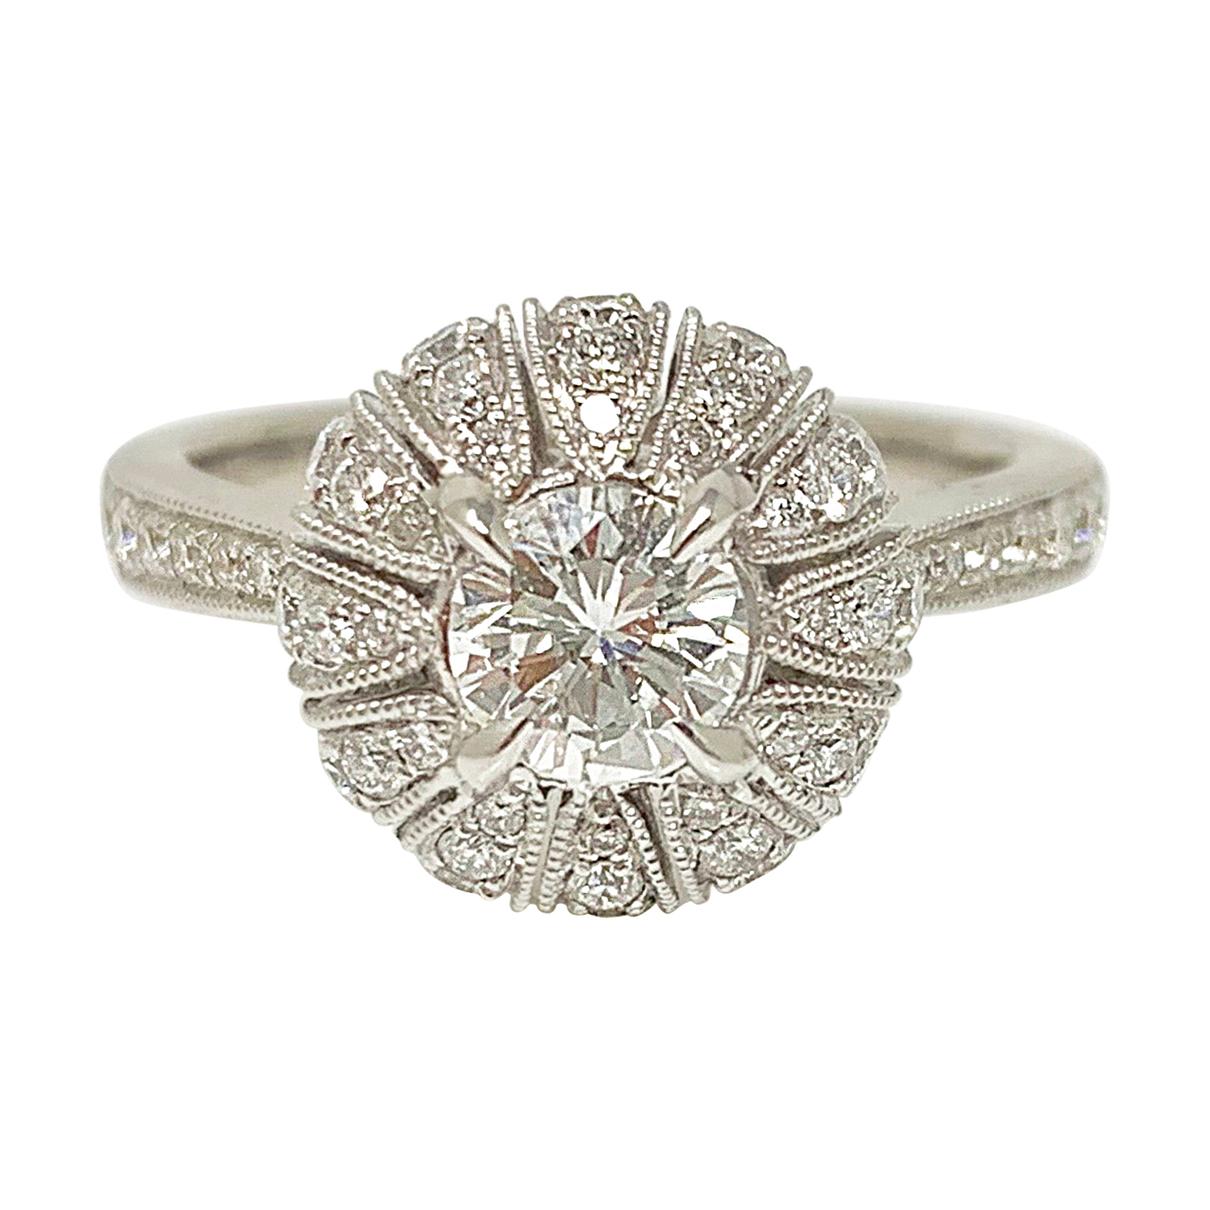 White Round Brilliant Cut Diamond Engagement Ring in 18 Karat White Gold